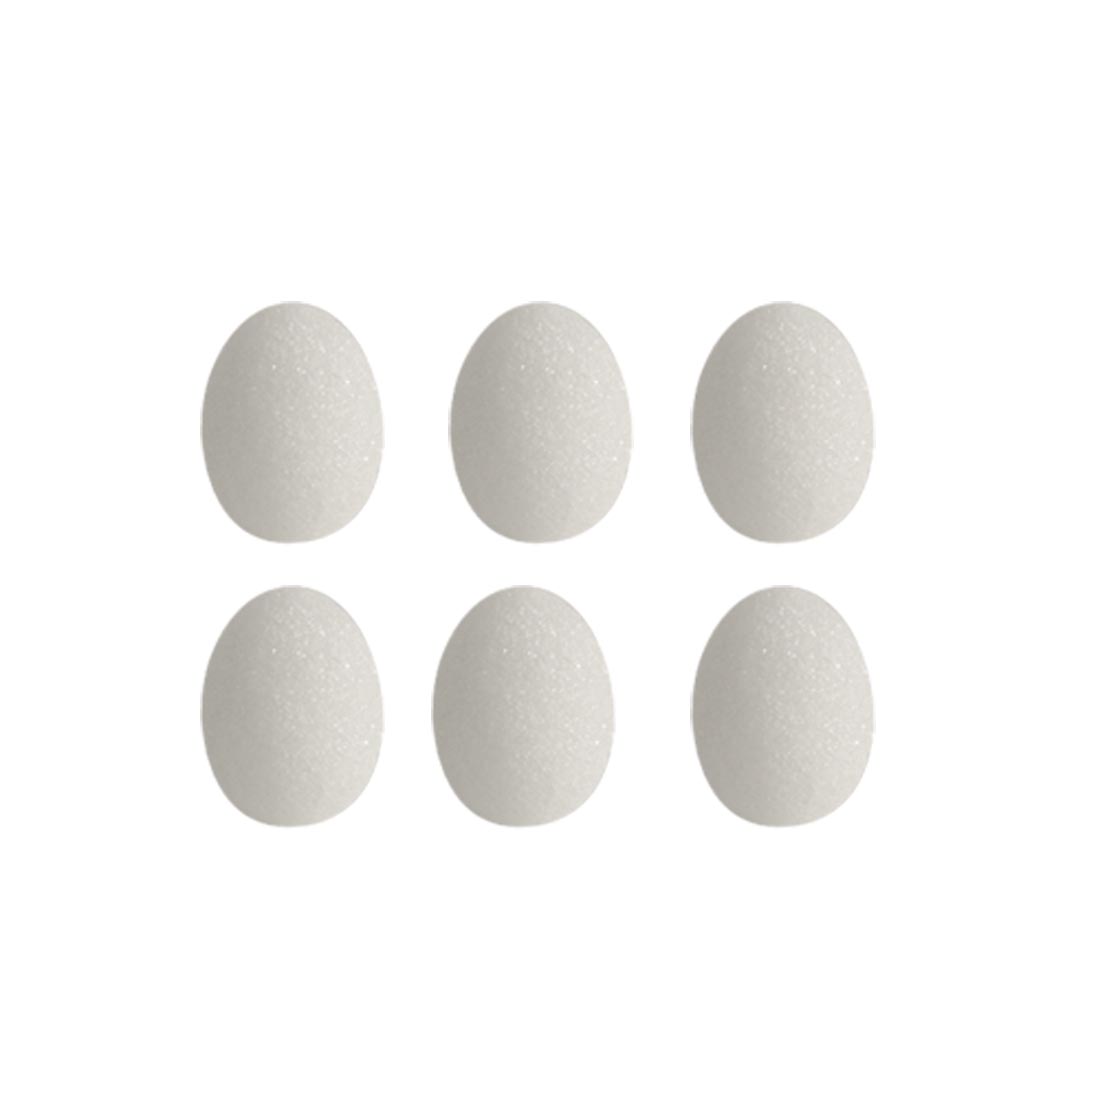 Six White craft foam Eggs